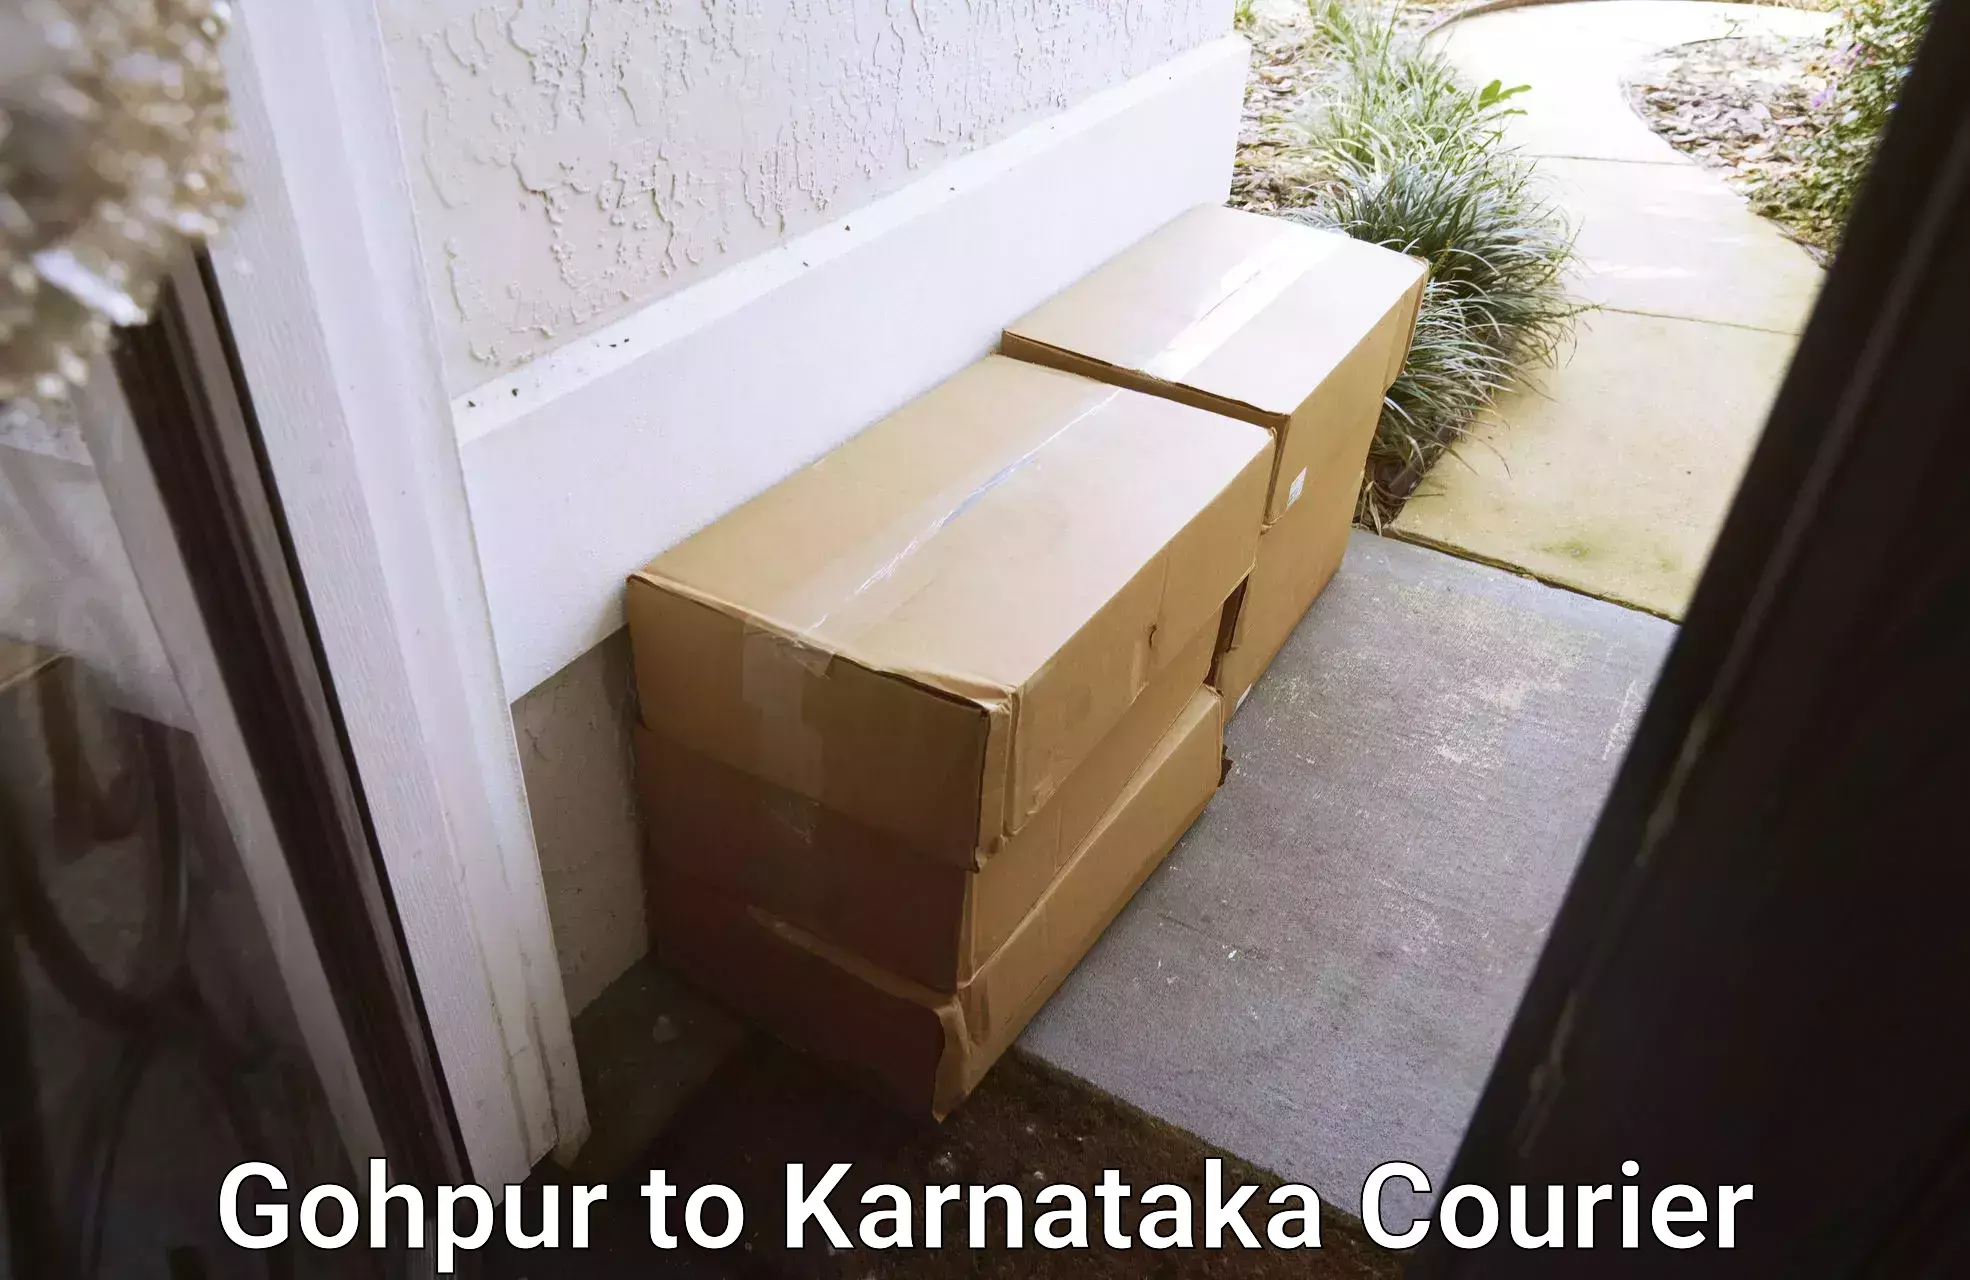 Courier service comparison Gohpur to Sakleshpur